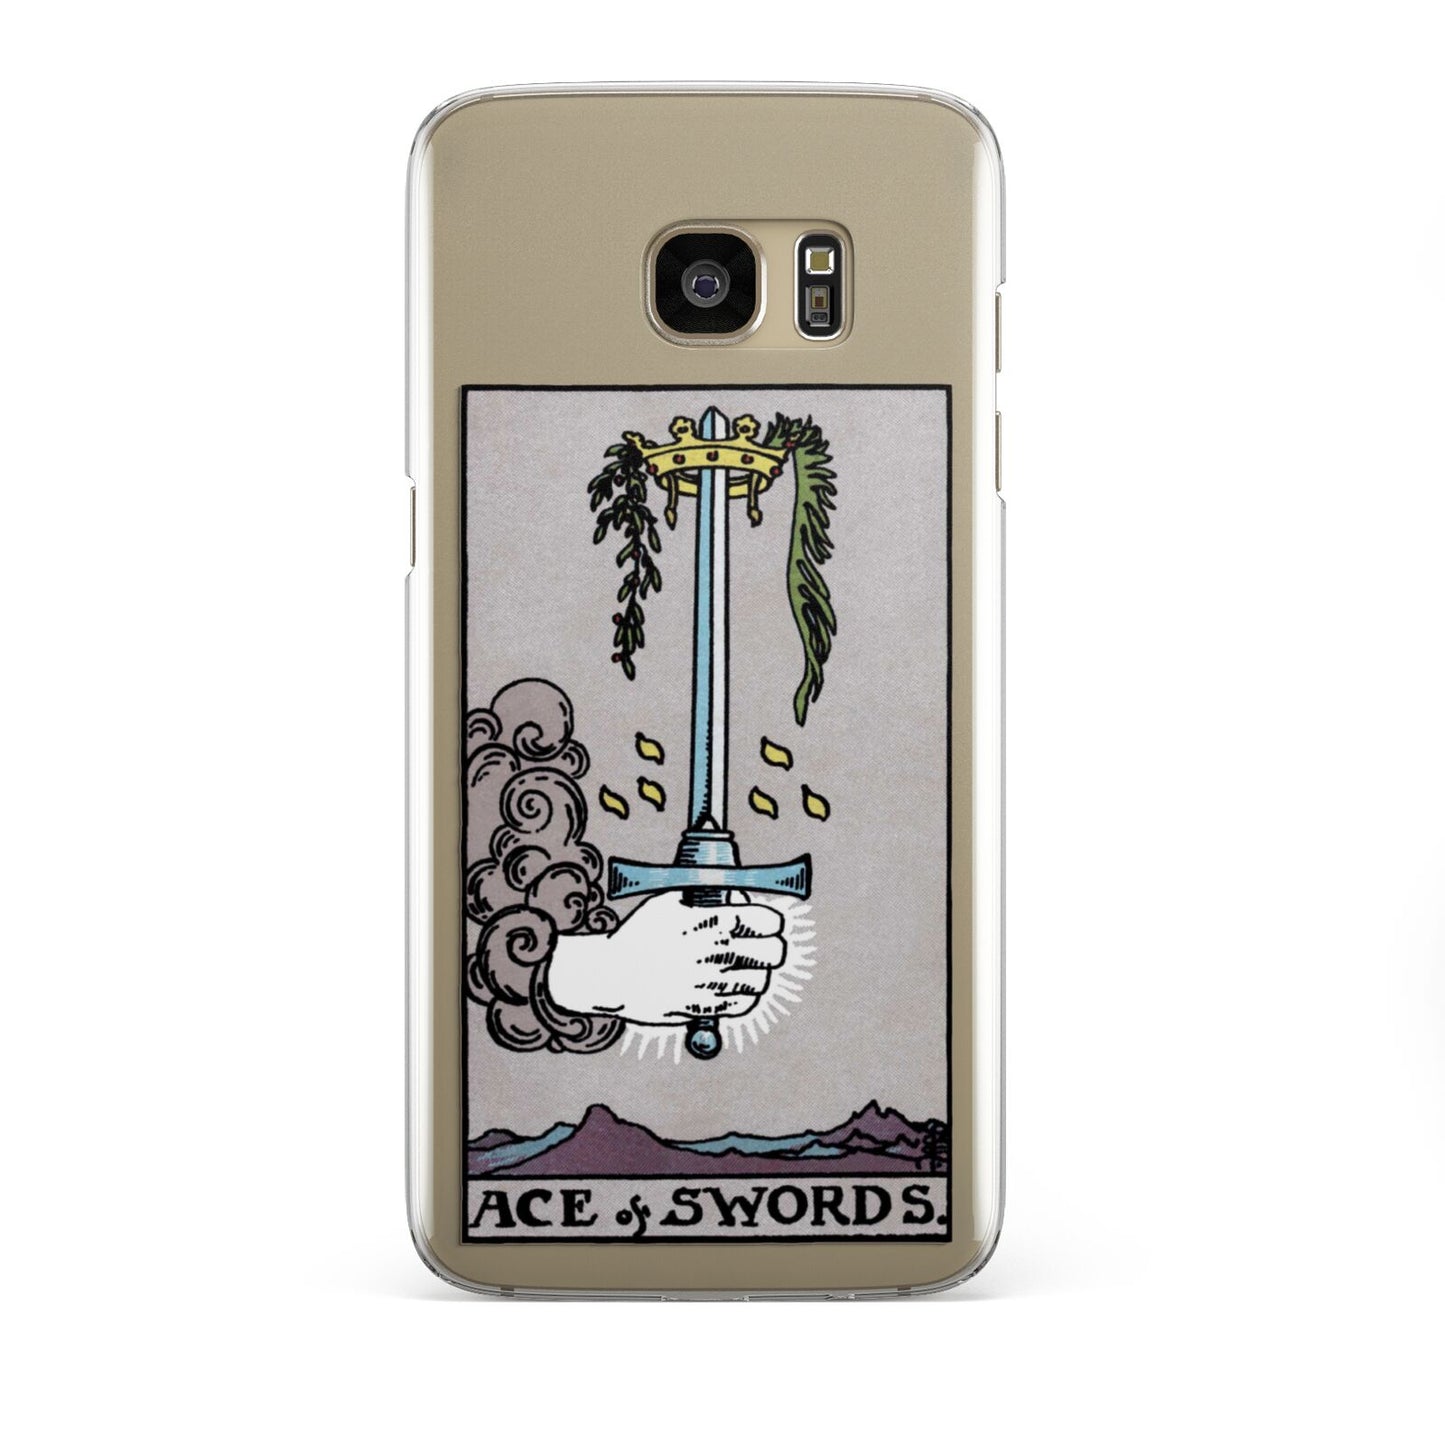 Ace of Swords Tarot Card Samsung Galaxy S7 Edge Case